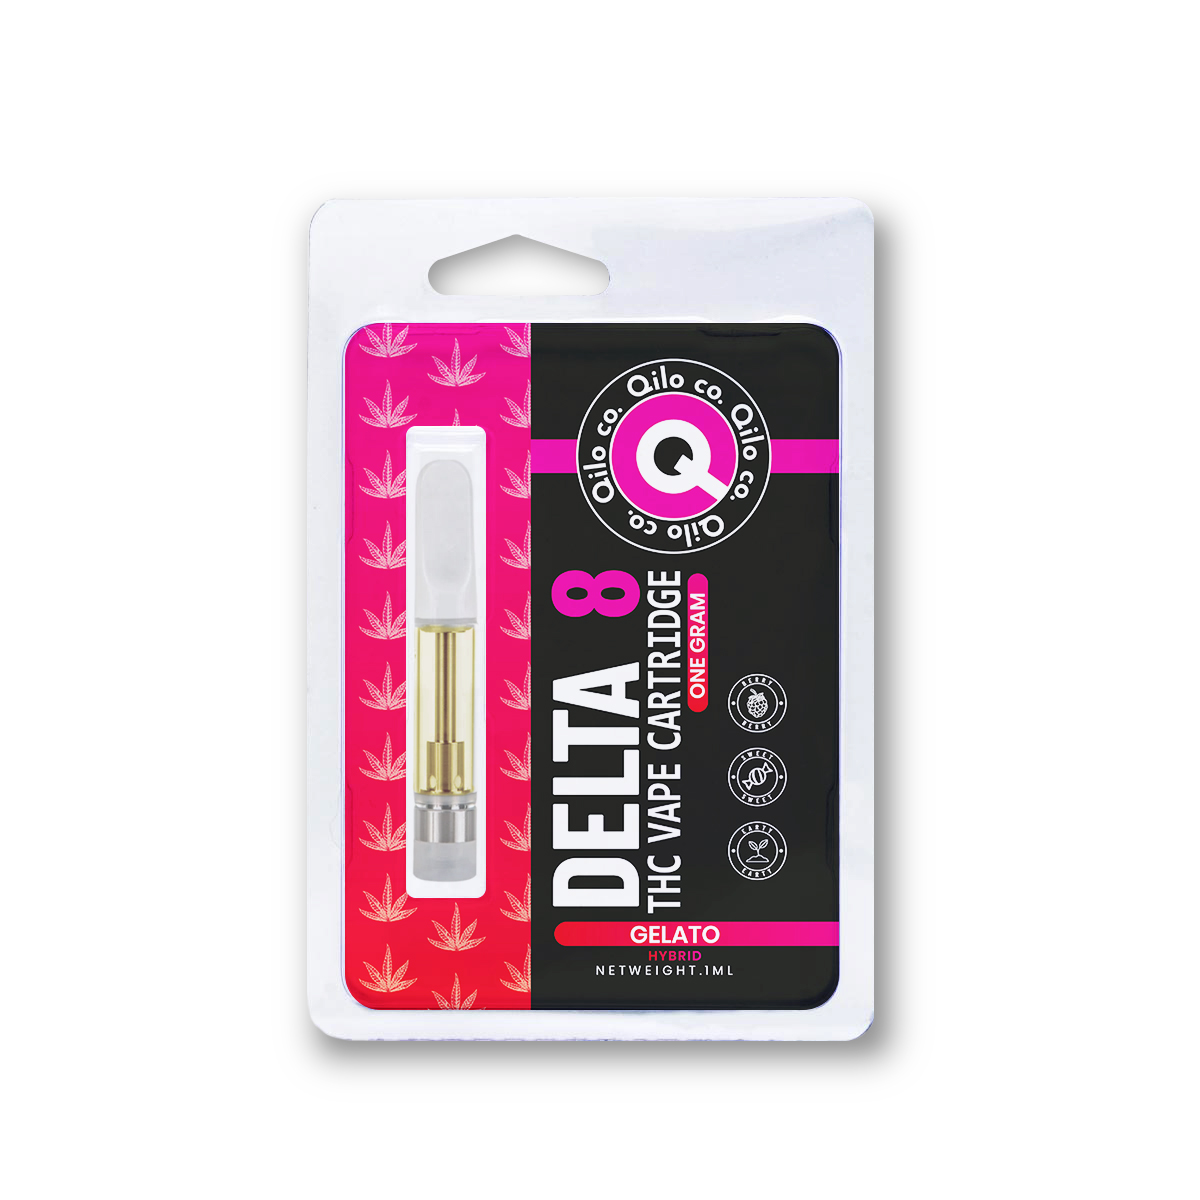 Download Gelato Delta 8 Vape Cartridge - Qilo Co